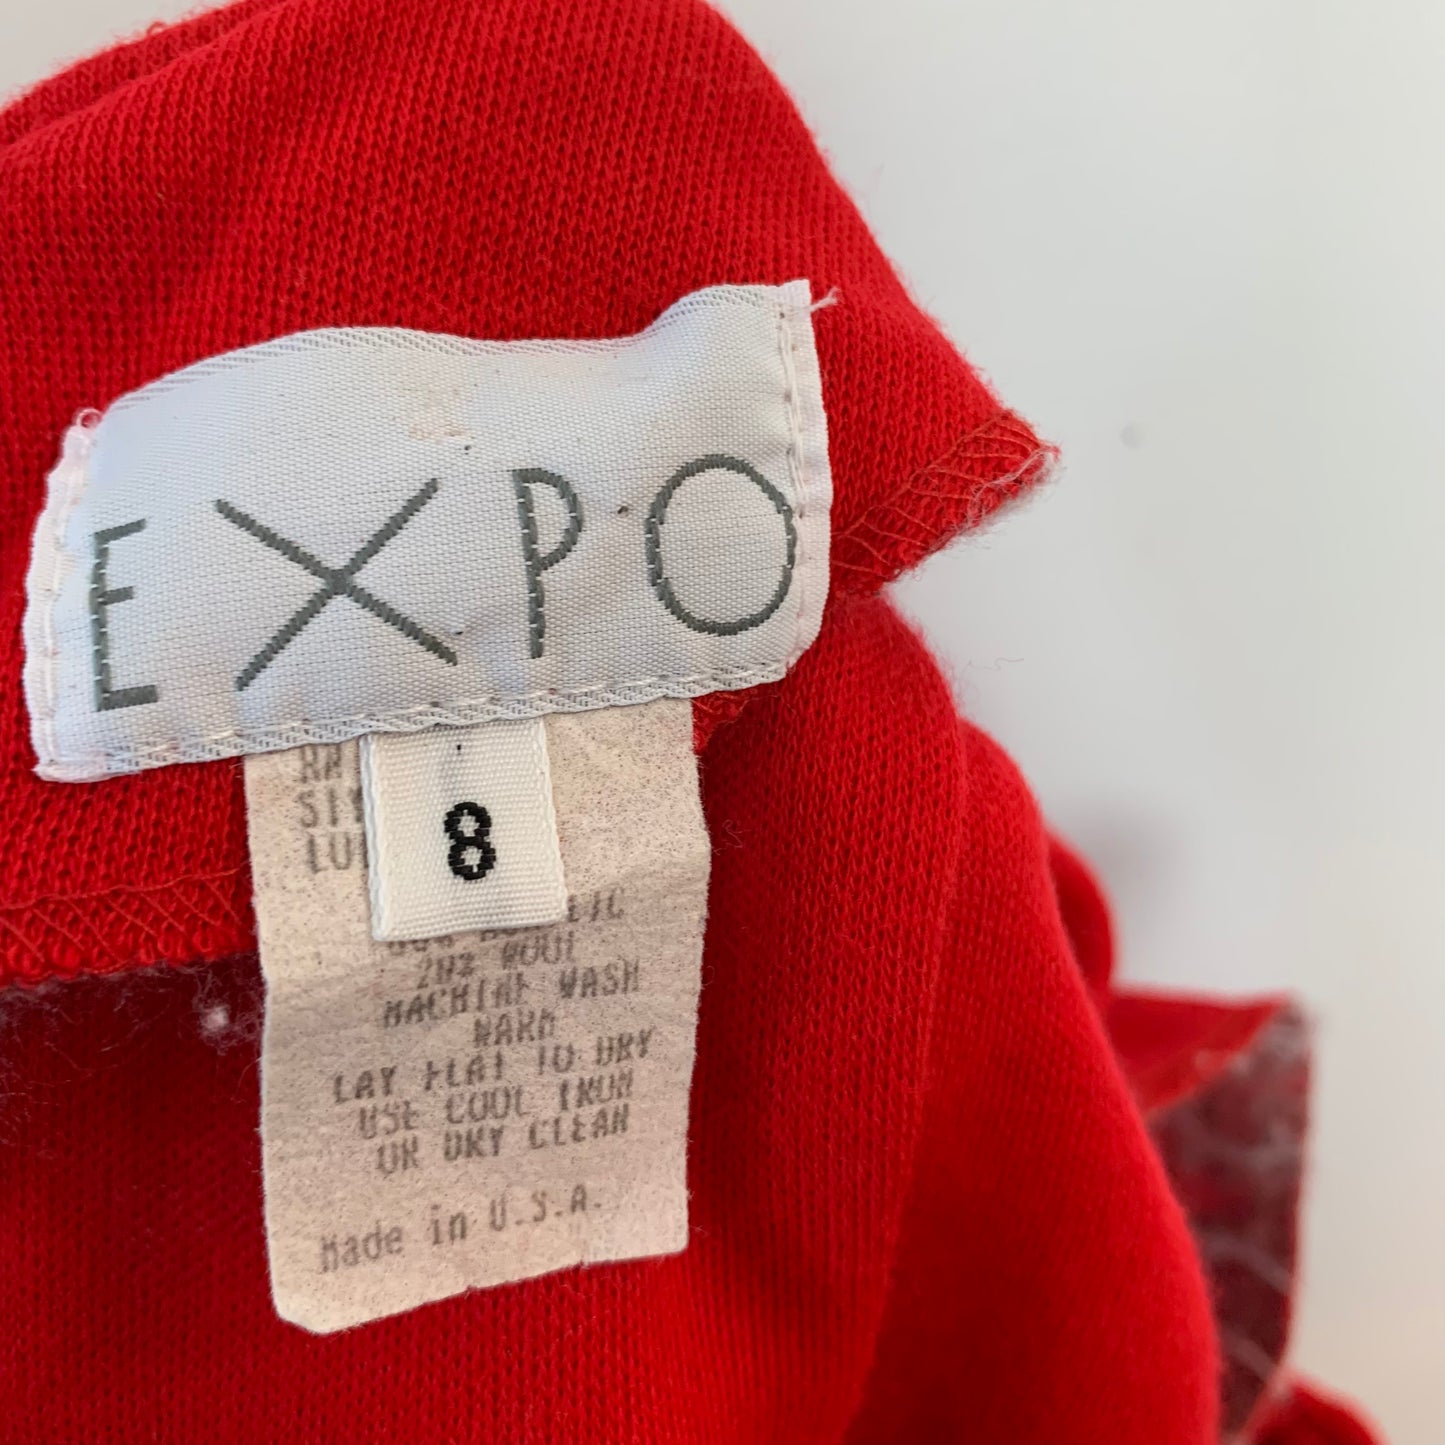 Vintage 90s Expo Red Midi Dress Long Sleeve Wool Blend 8